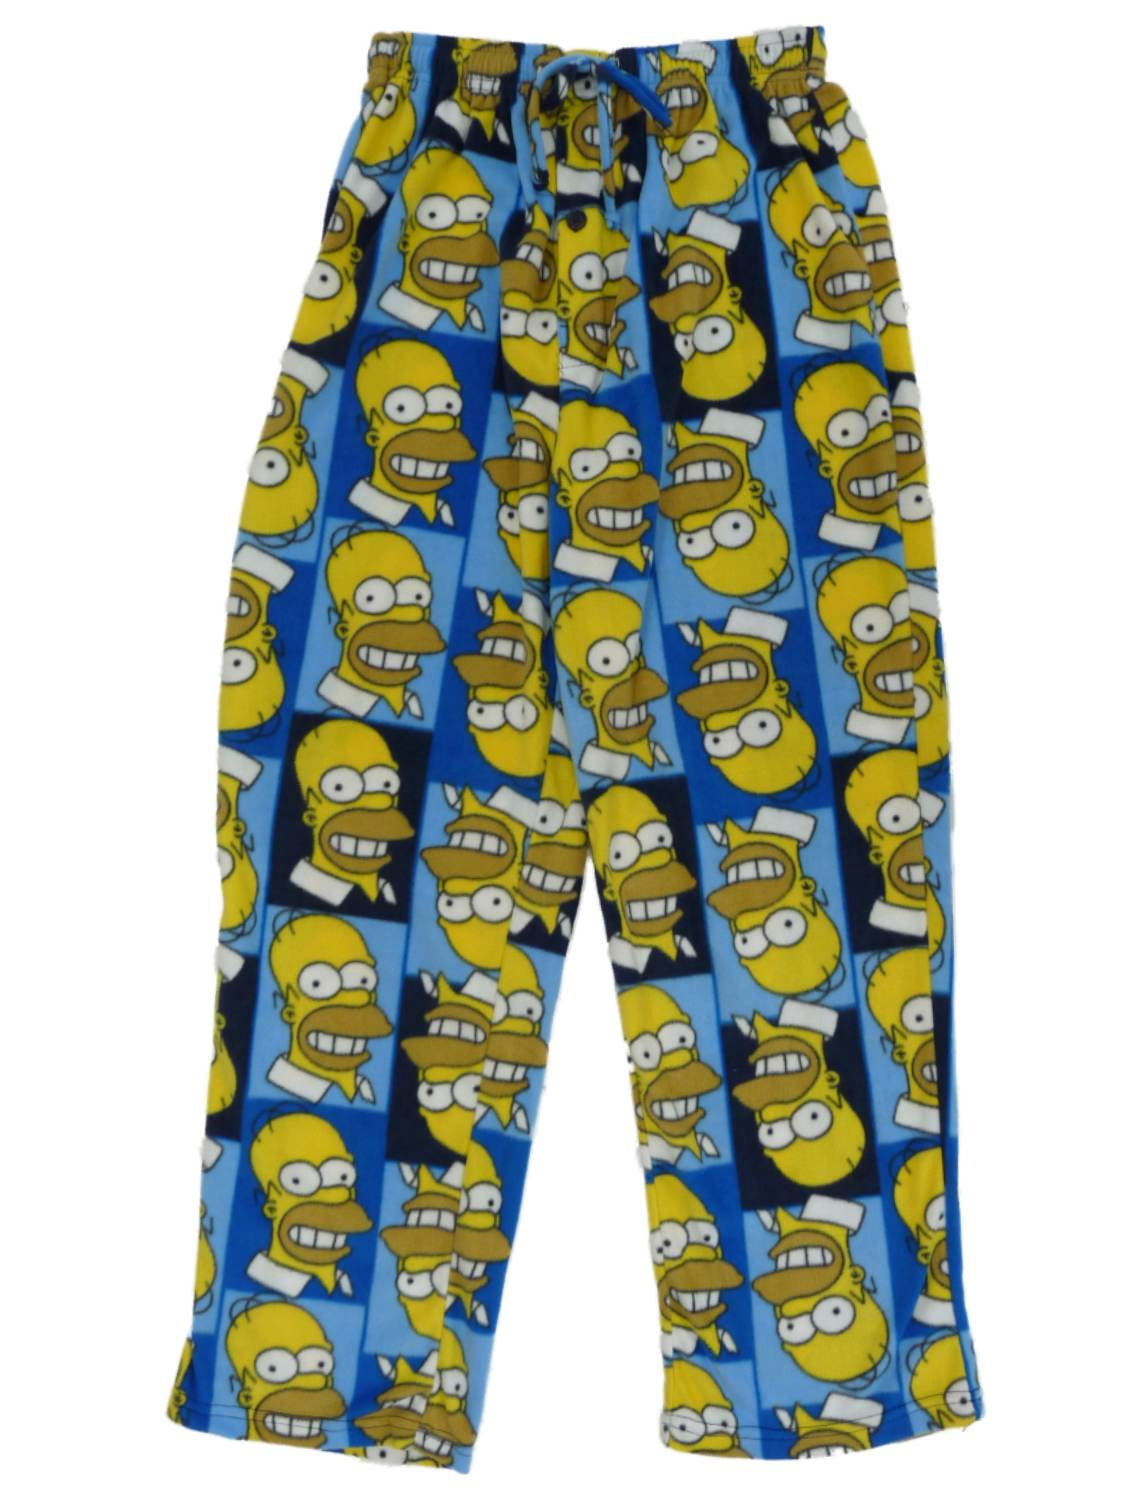 The Simpsons The Simpsons Mens Blue Fleece Sleep Pants